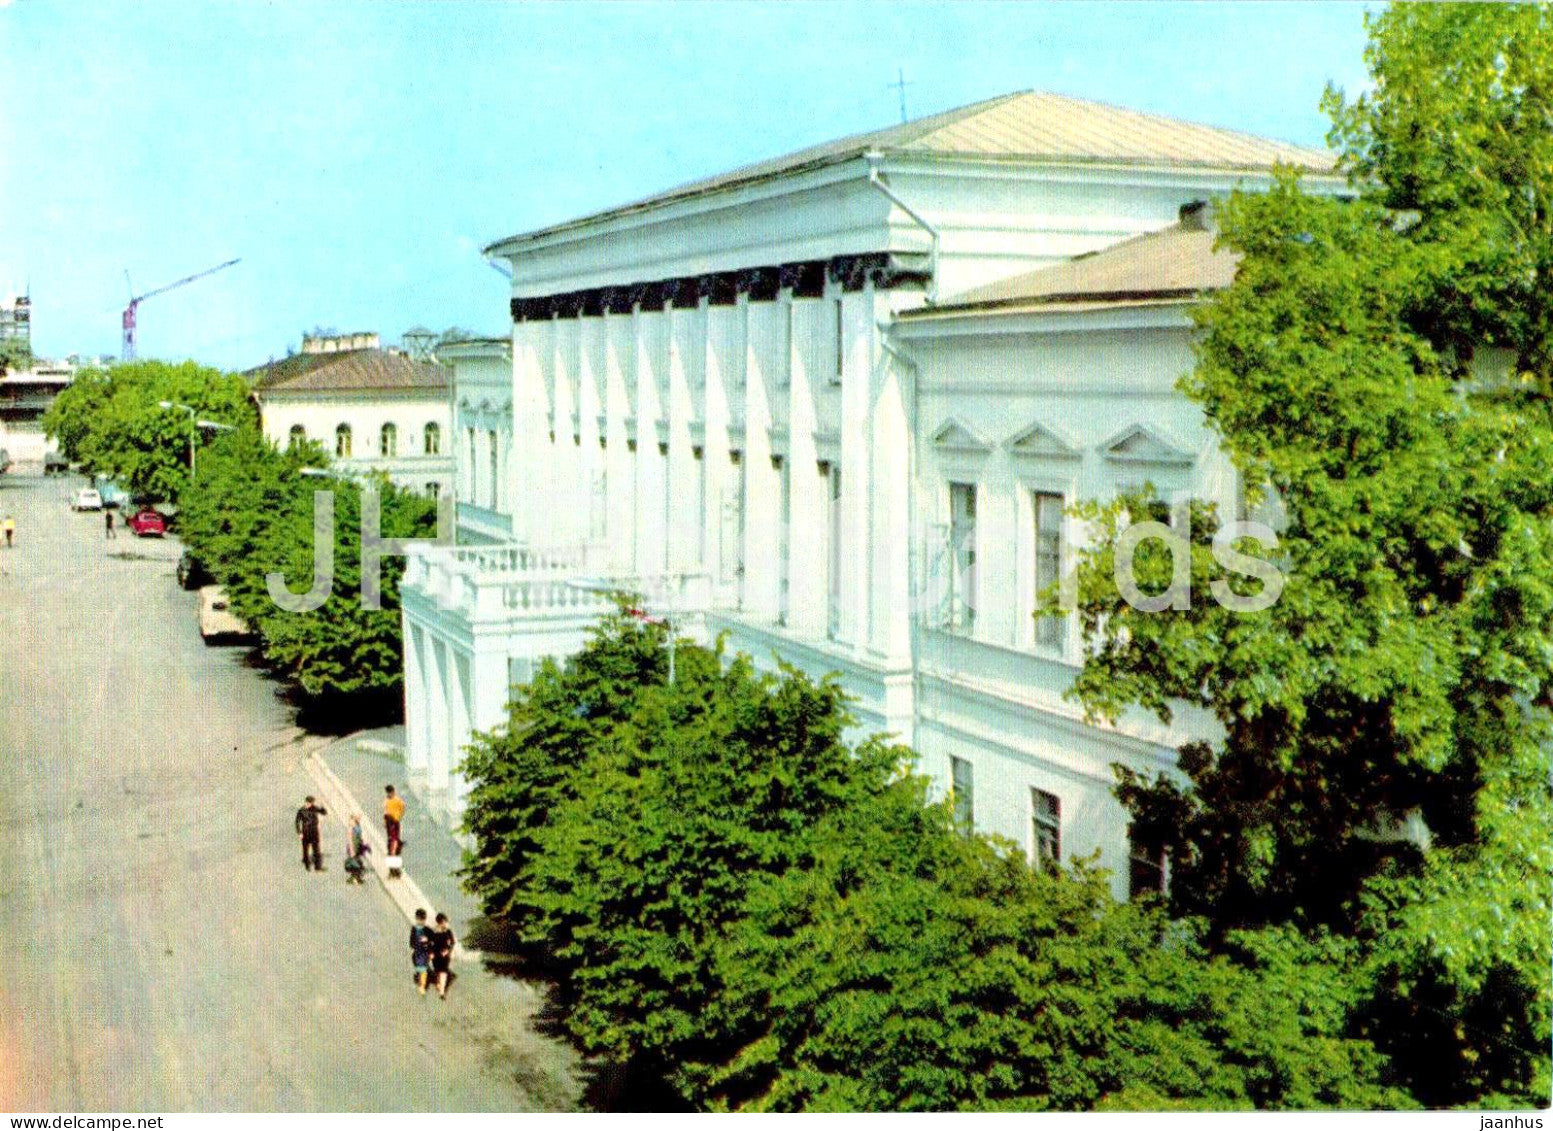 Ulyanovsk - Regional Library - Lenin Palace of Books - postal stationery - 1968 - Russia USSR - unused - JH Postcards